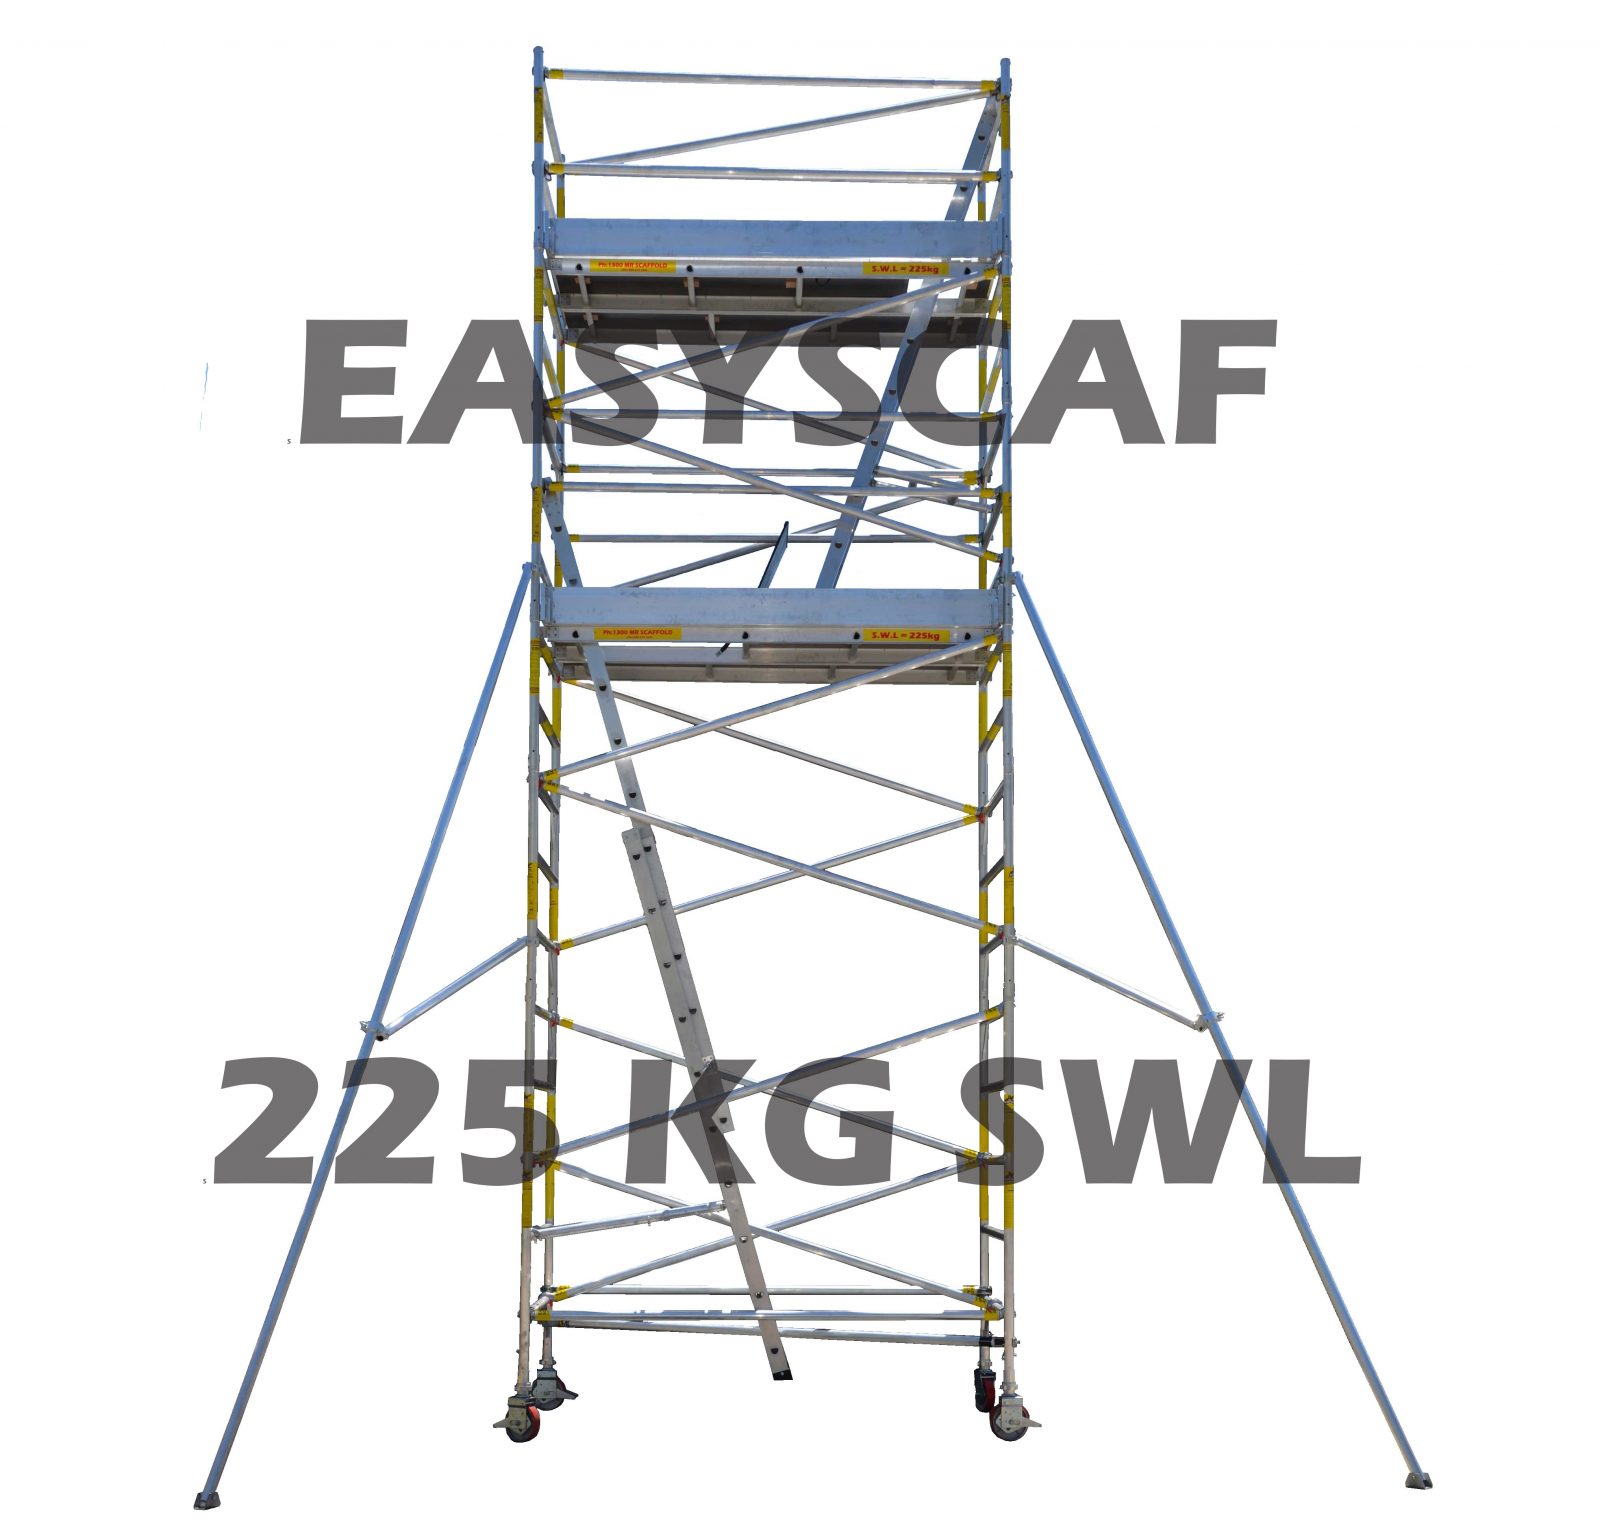 scaffolding melbourne